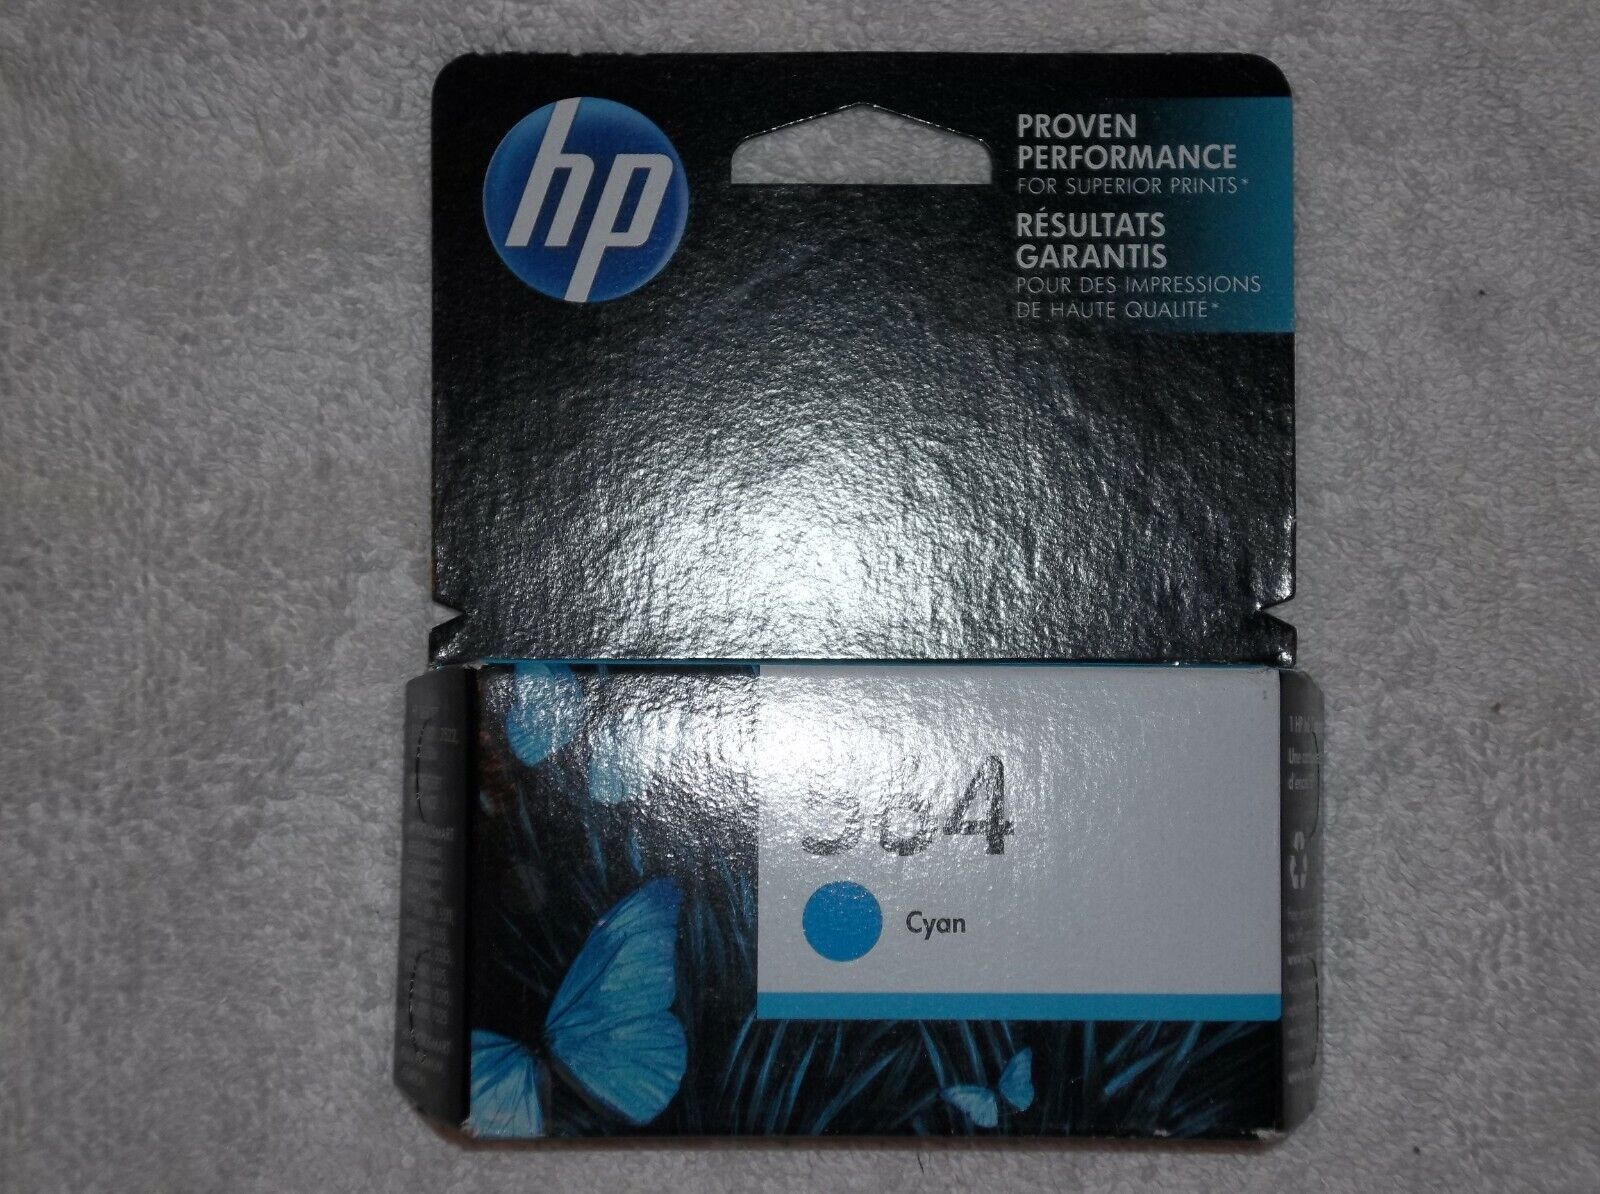 HP 564 Cyan Ink Cartridge Genuine New Exp OCT 2015 